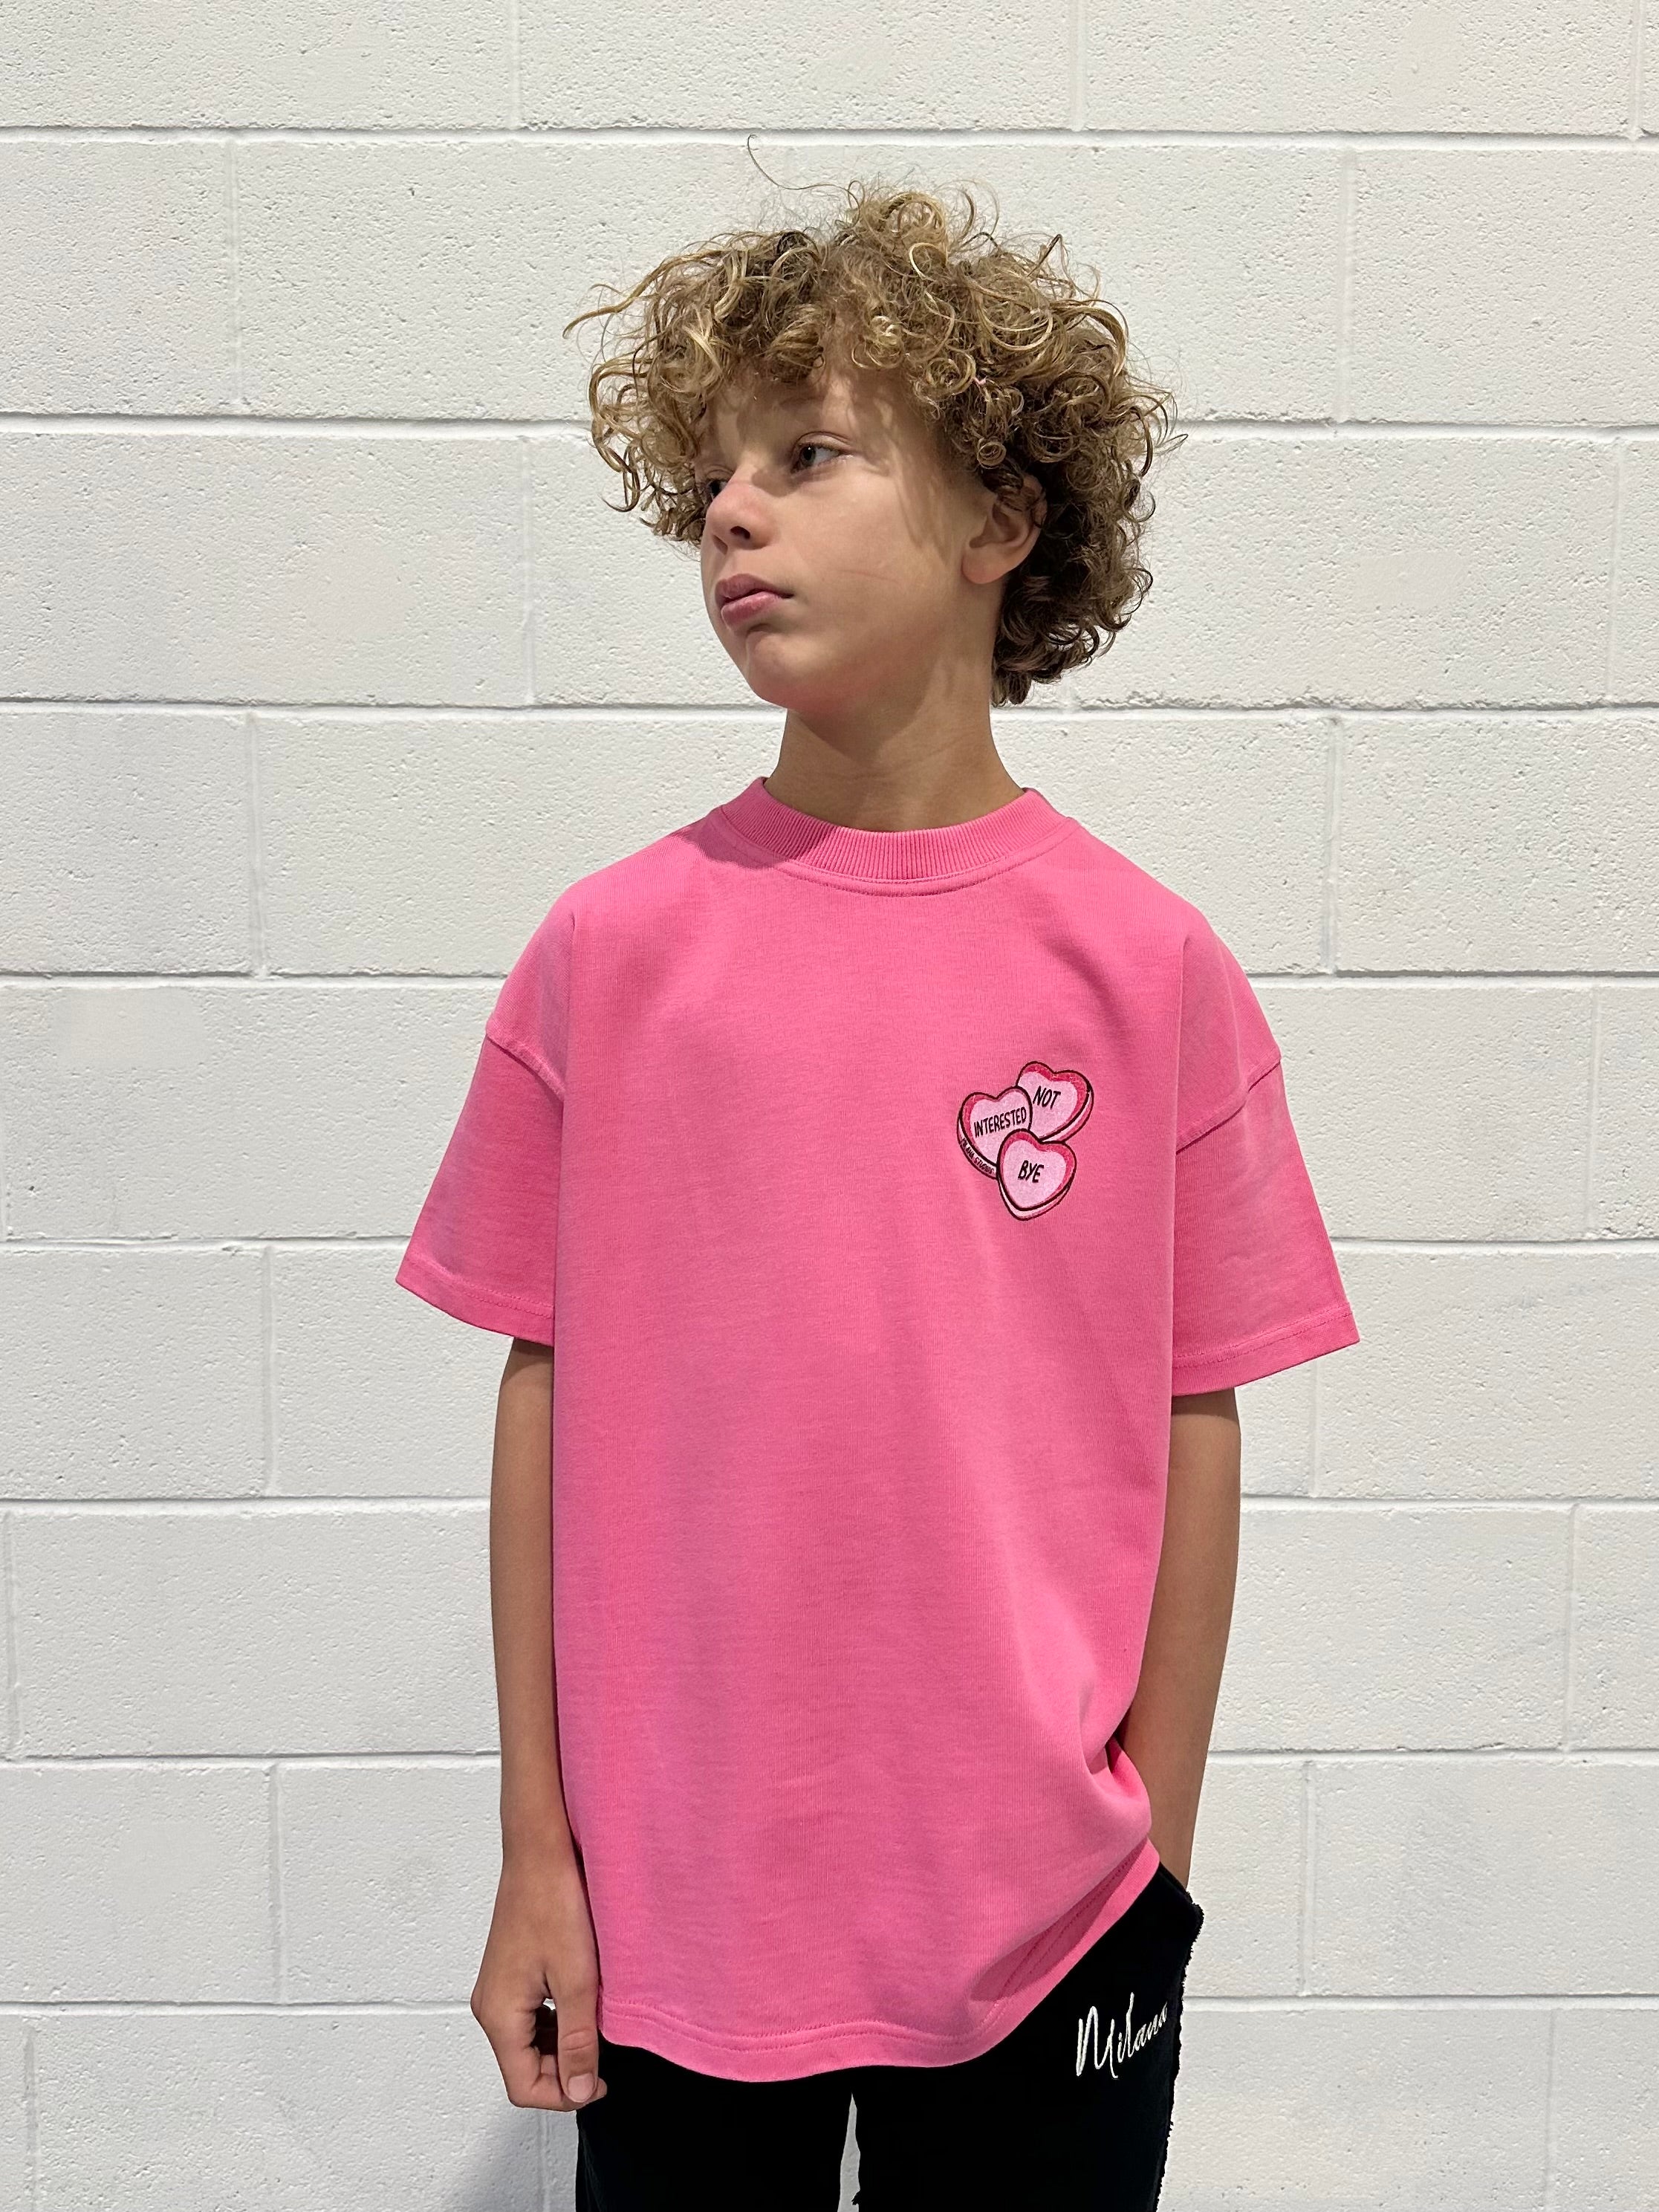 Pink Hearts Kids T-shirt.